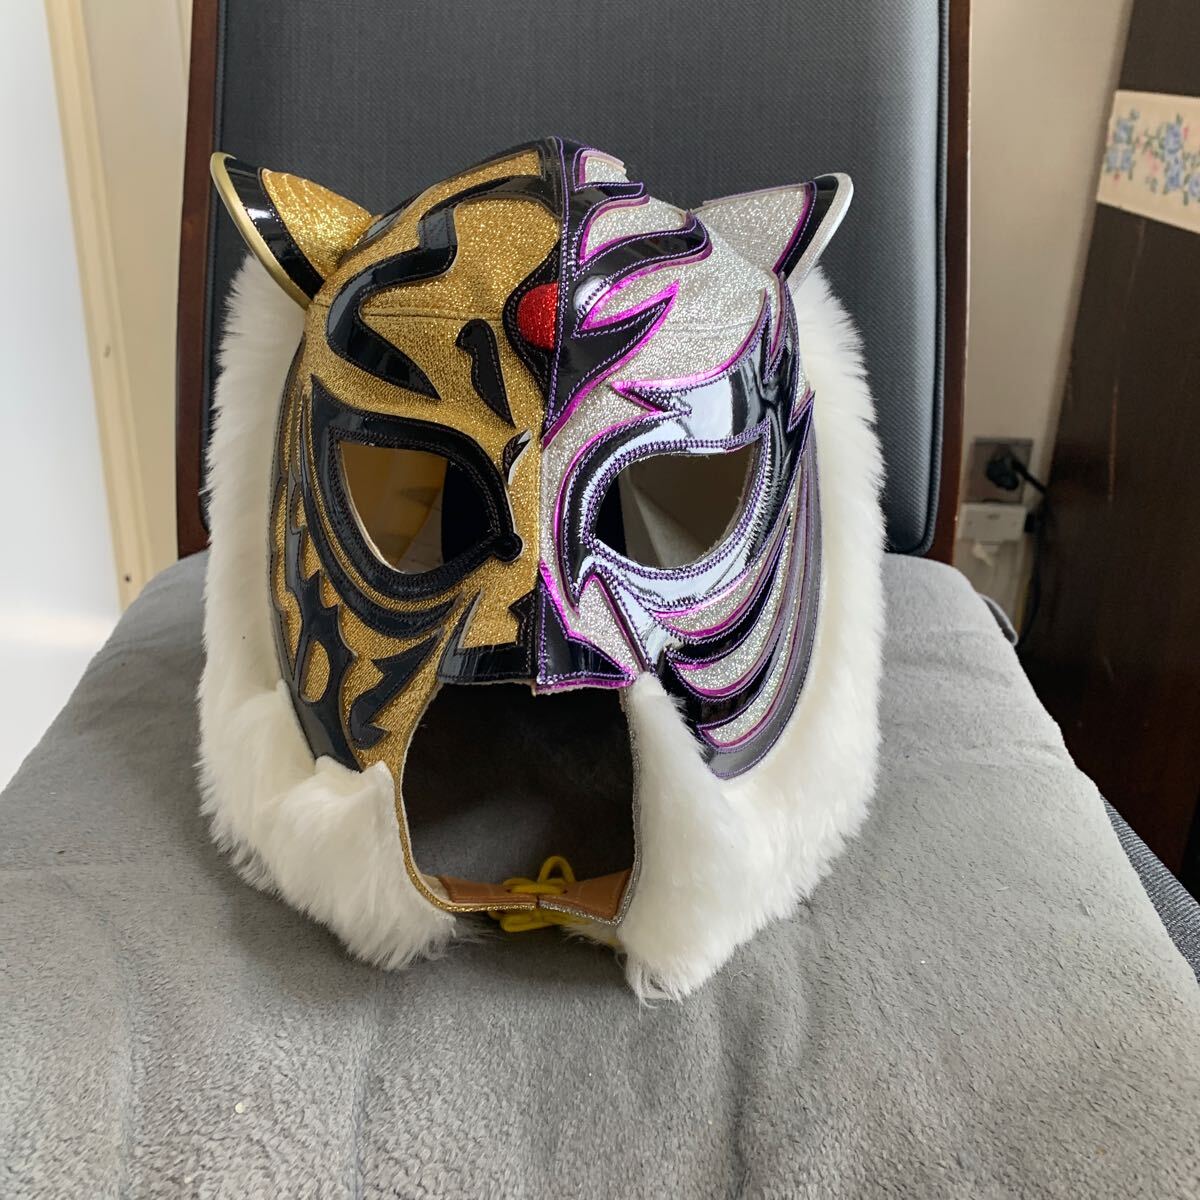  первое поколение Tiger Mask YN производства Triple подписан 